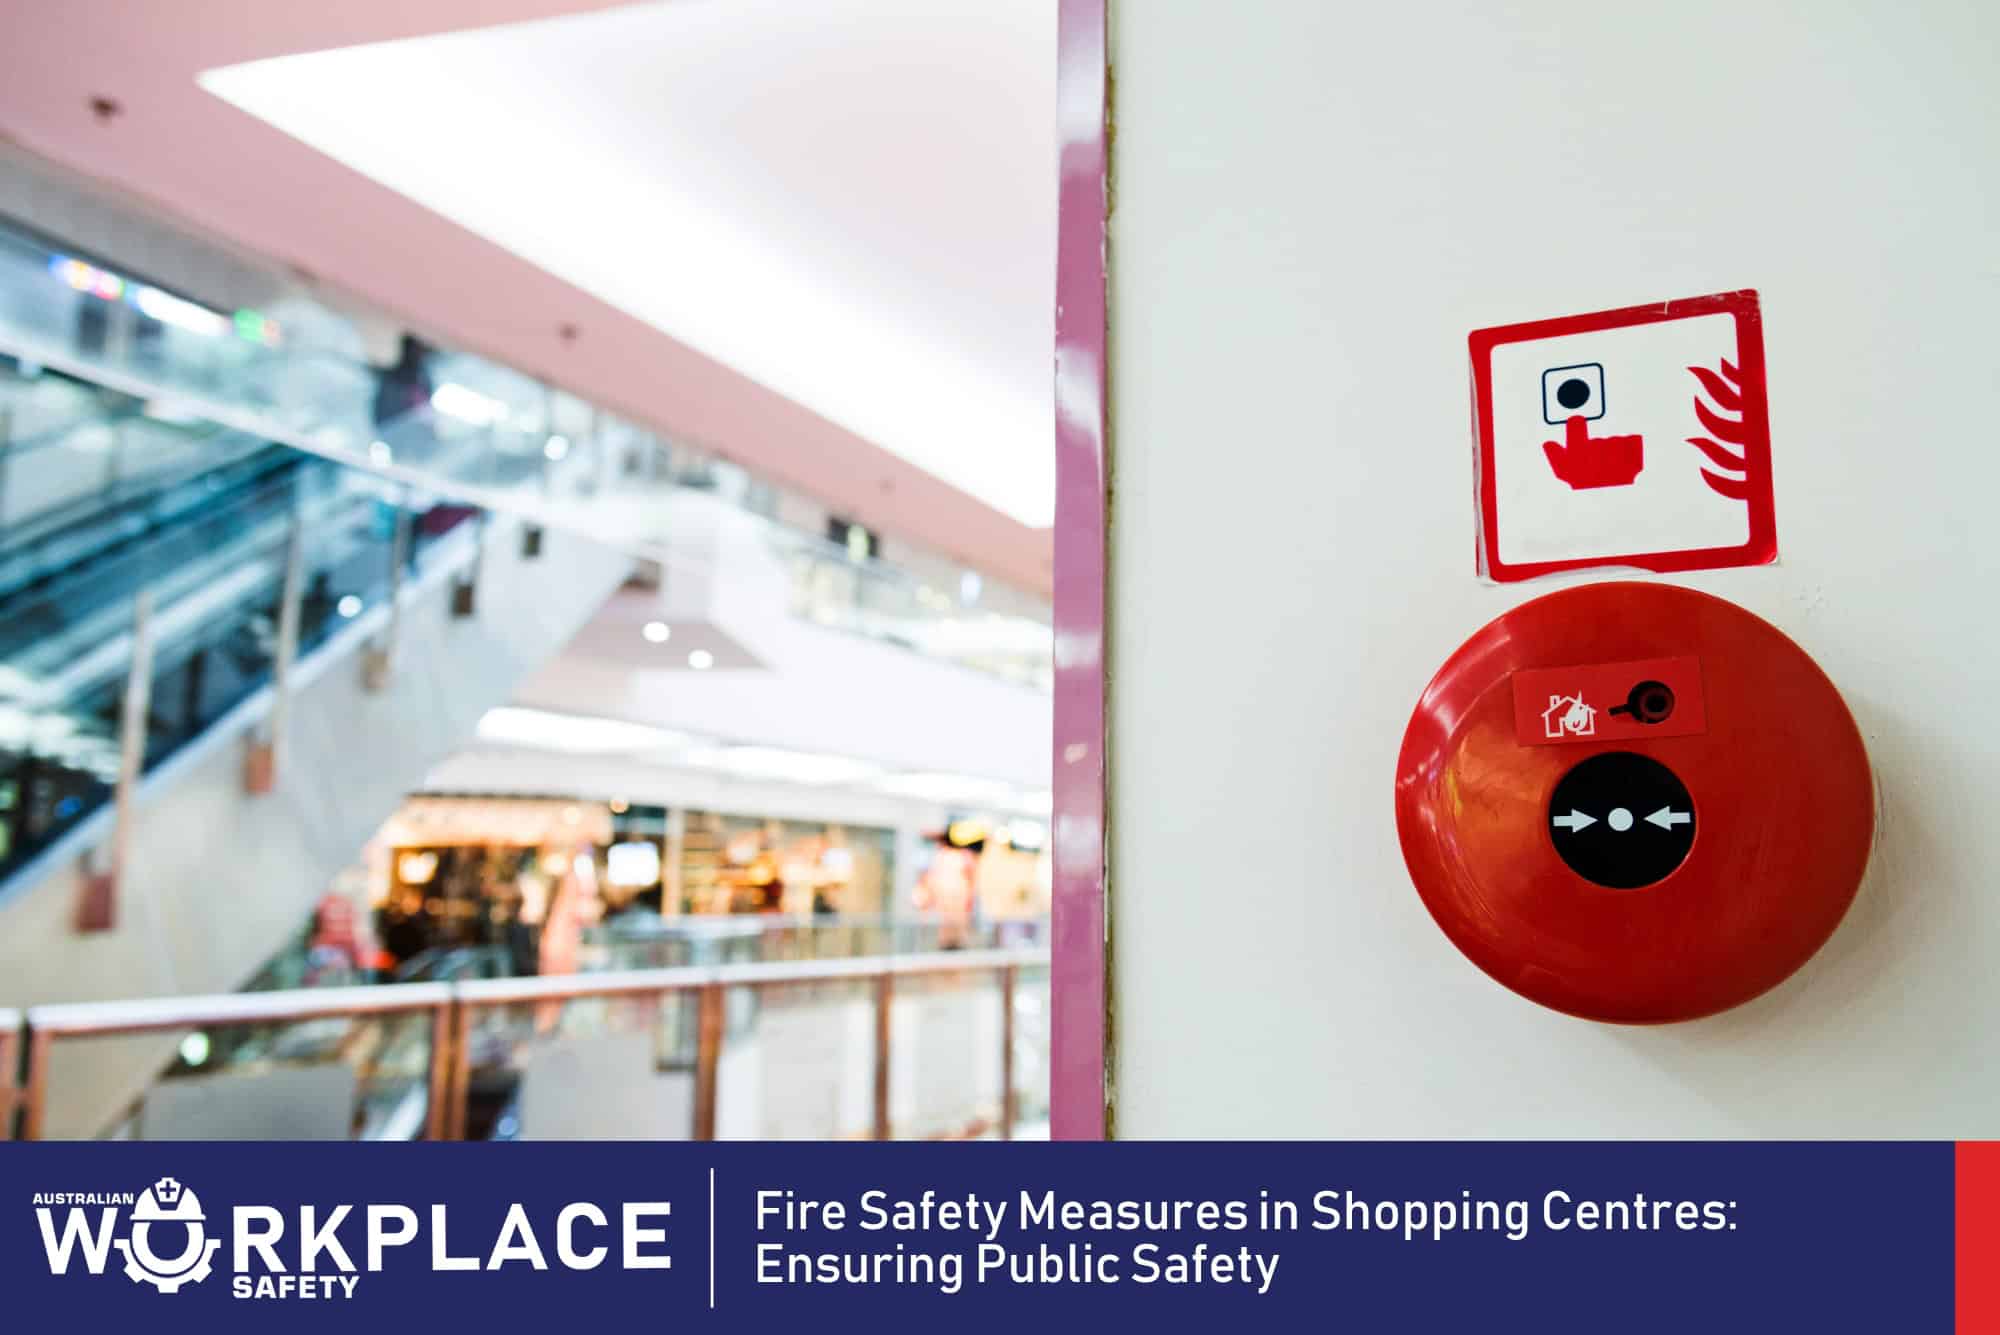 round fire alarm inside a shopping centre